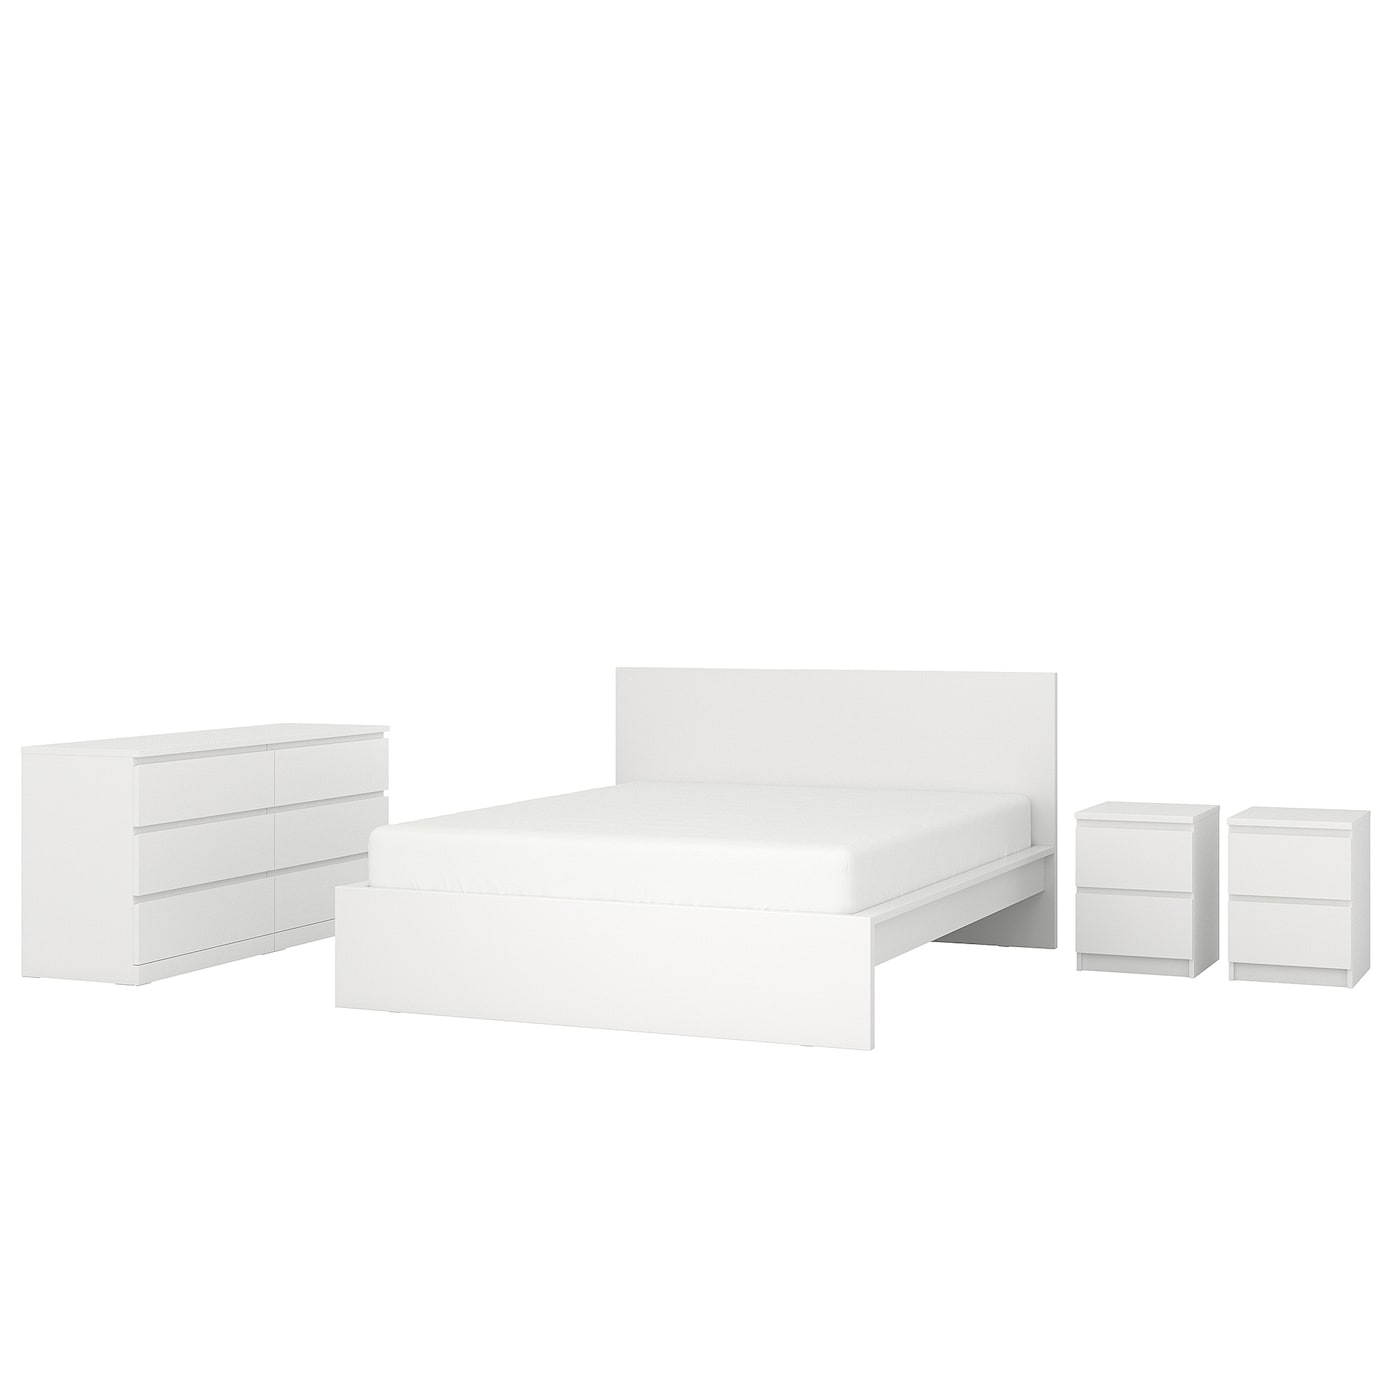 Комплект мебели для спальни - IKEA MALM/LURÖY/LUROY, 160х200см, белый, МАЛЬМ/ЛУРОЙ ИКЕА